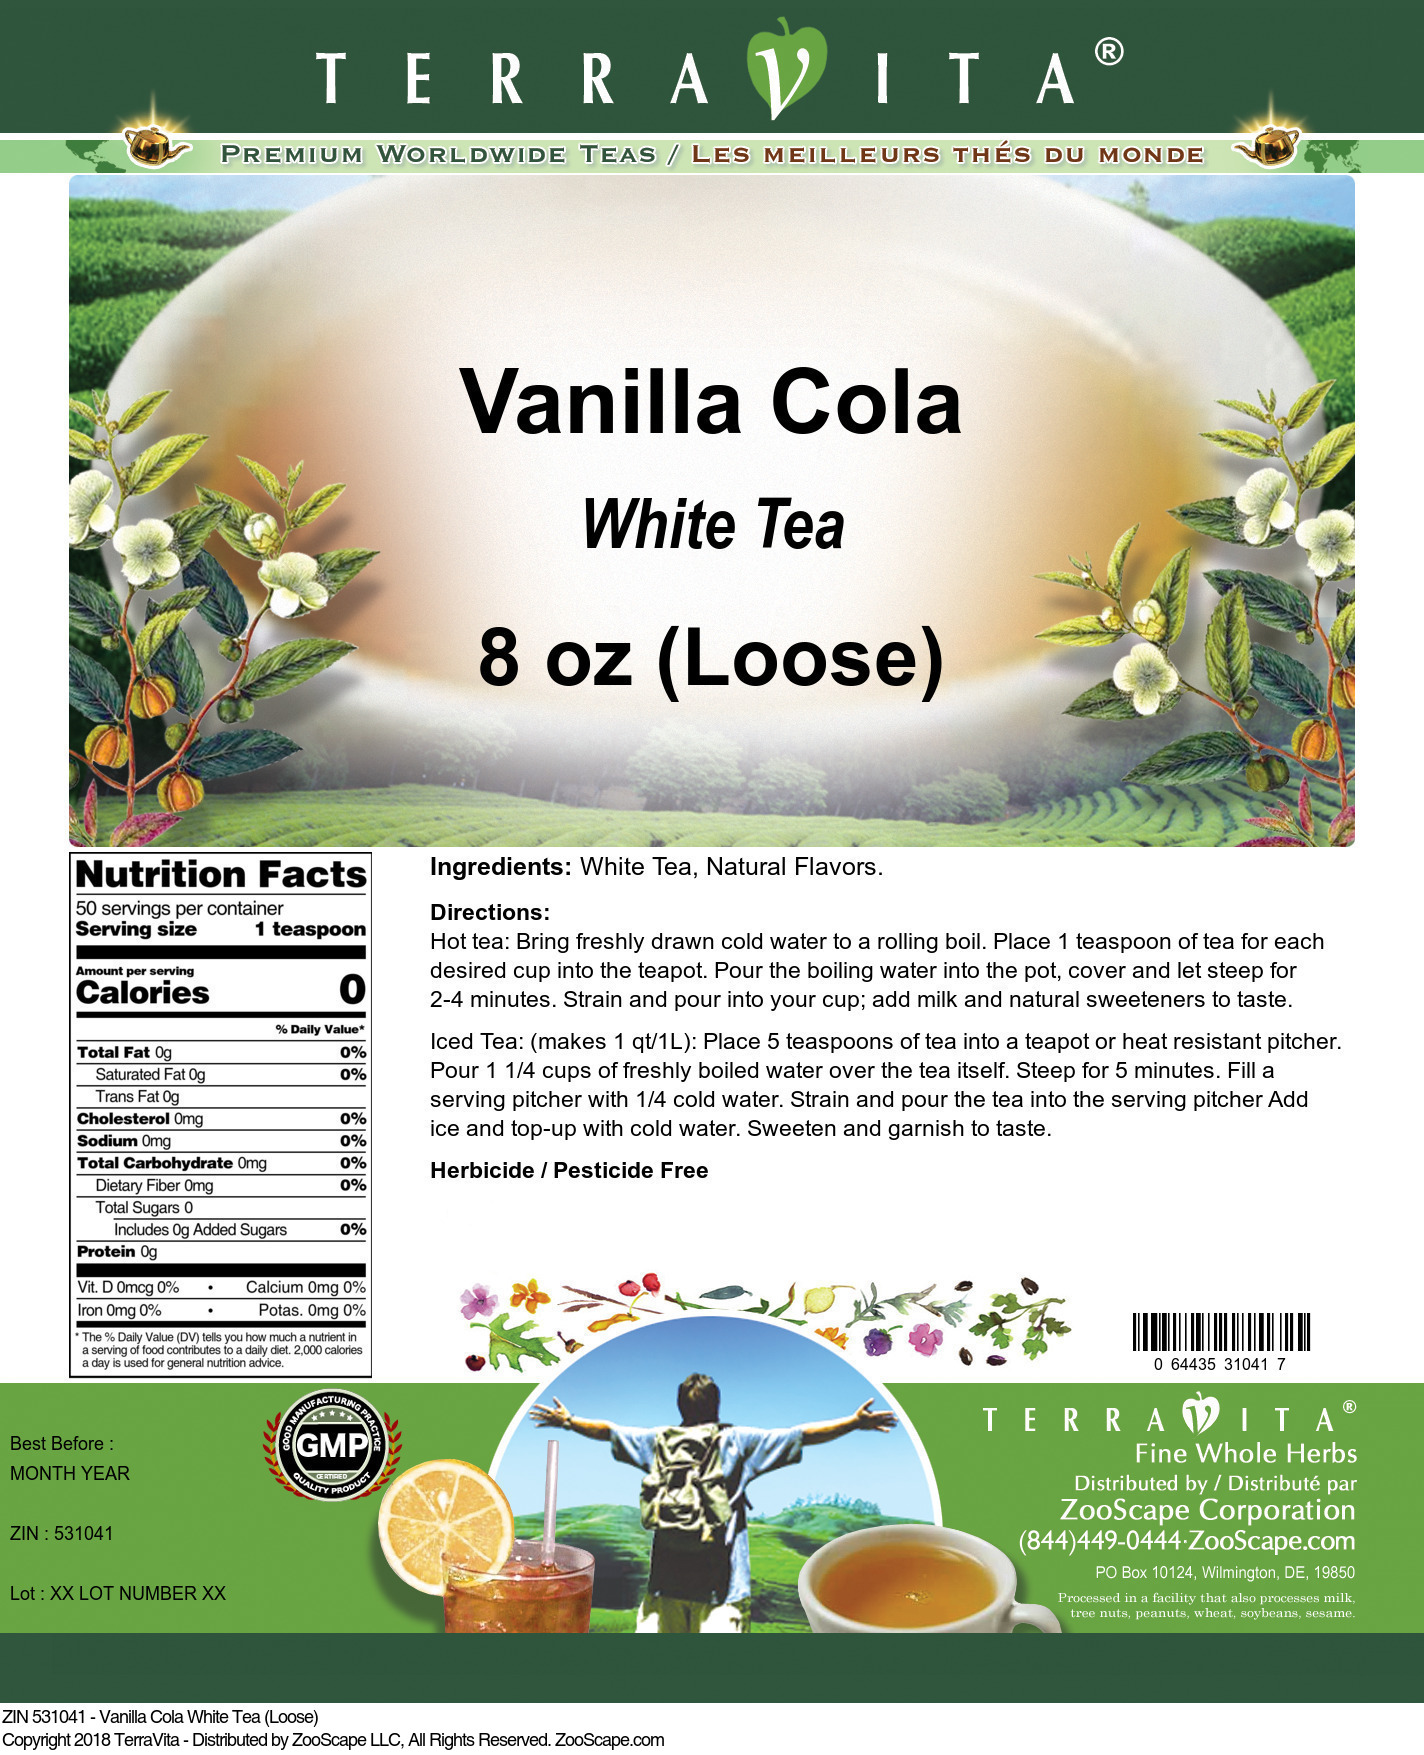 Vanilla Cola White Tea (Loose) - Label